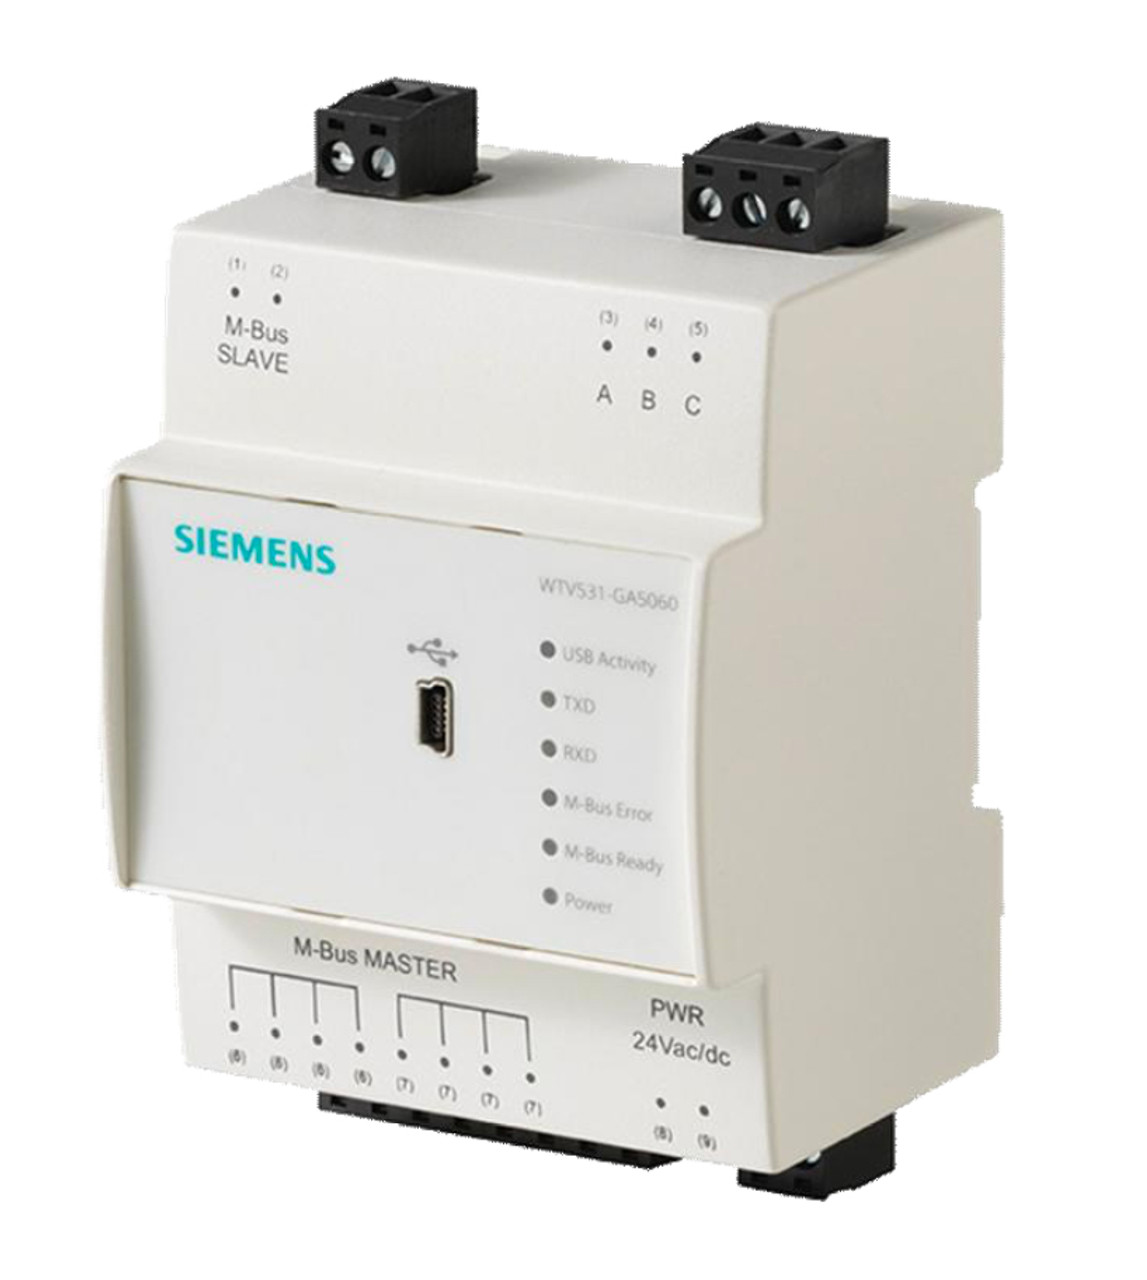 Siemens WTV531-GA5060, Level converter, S55563-F145